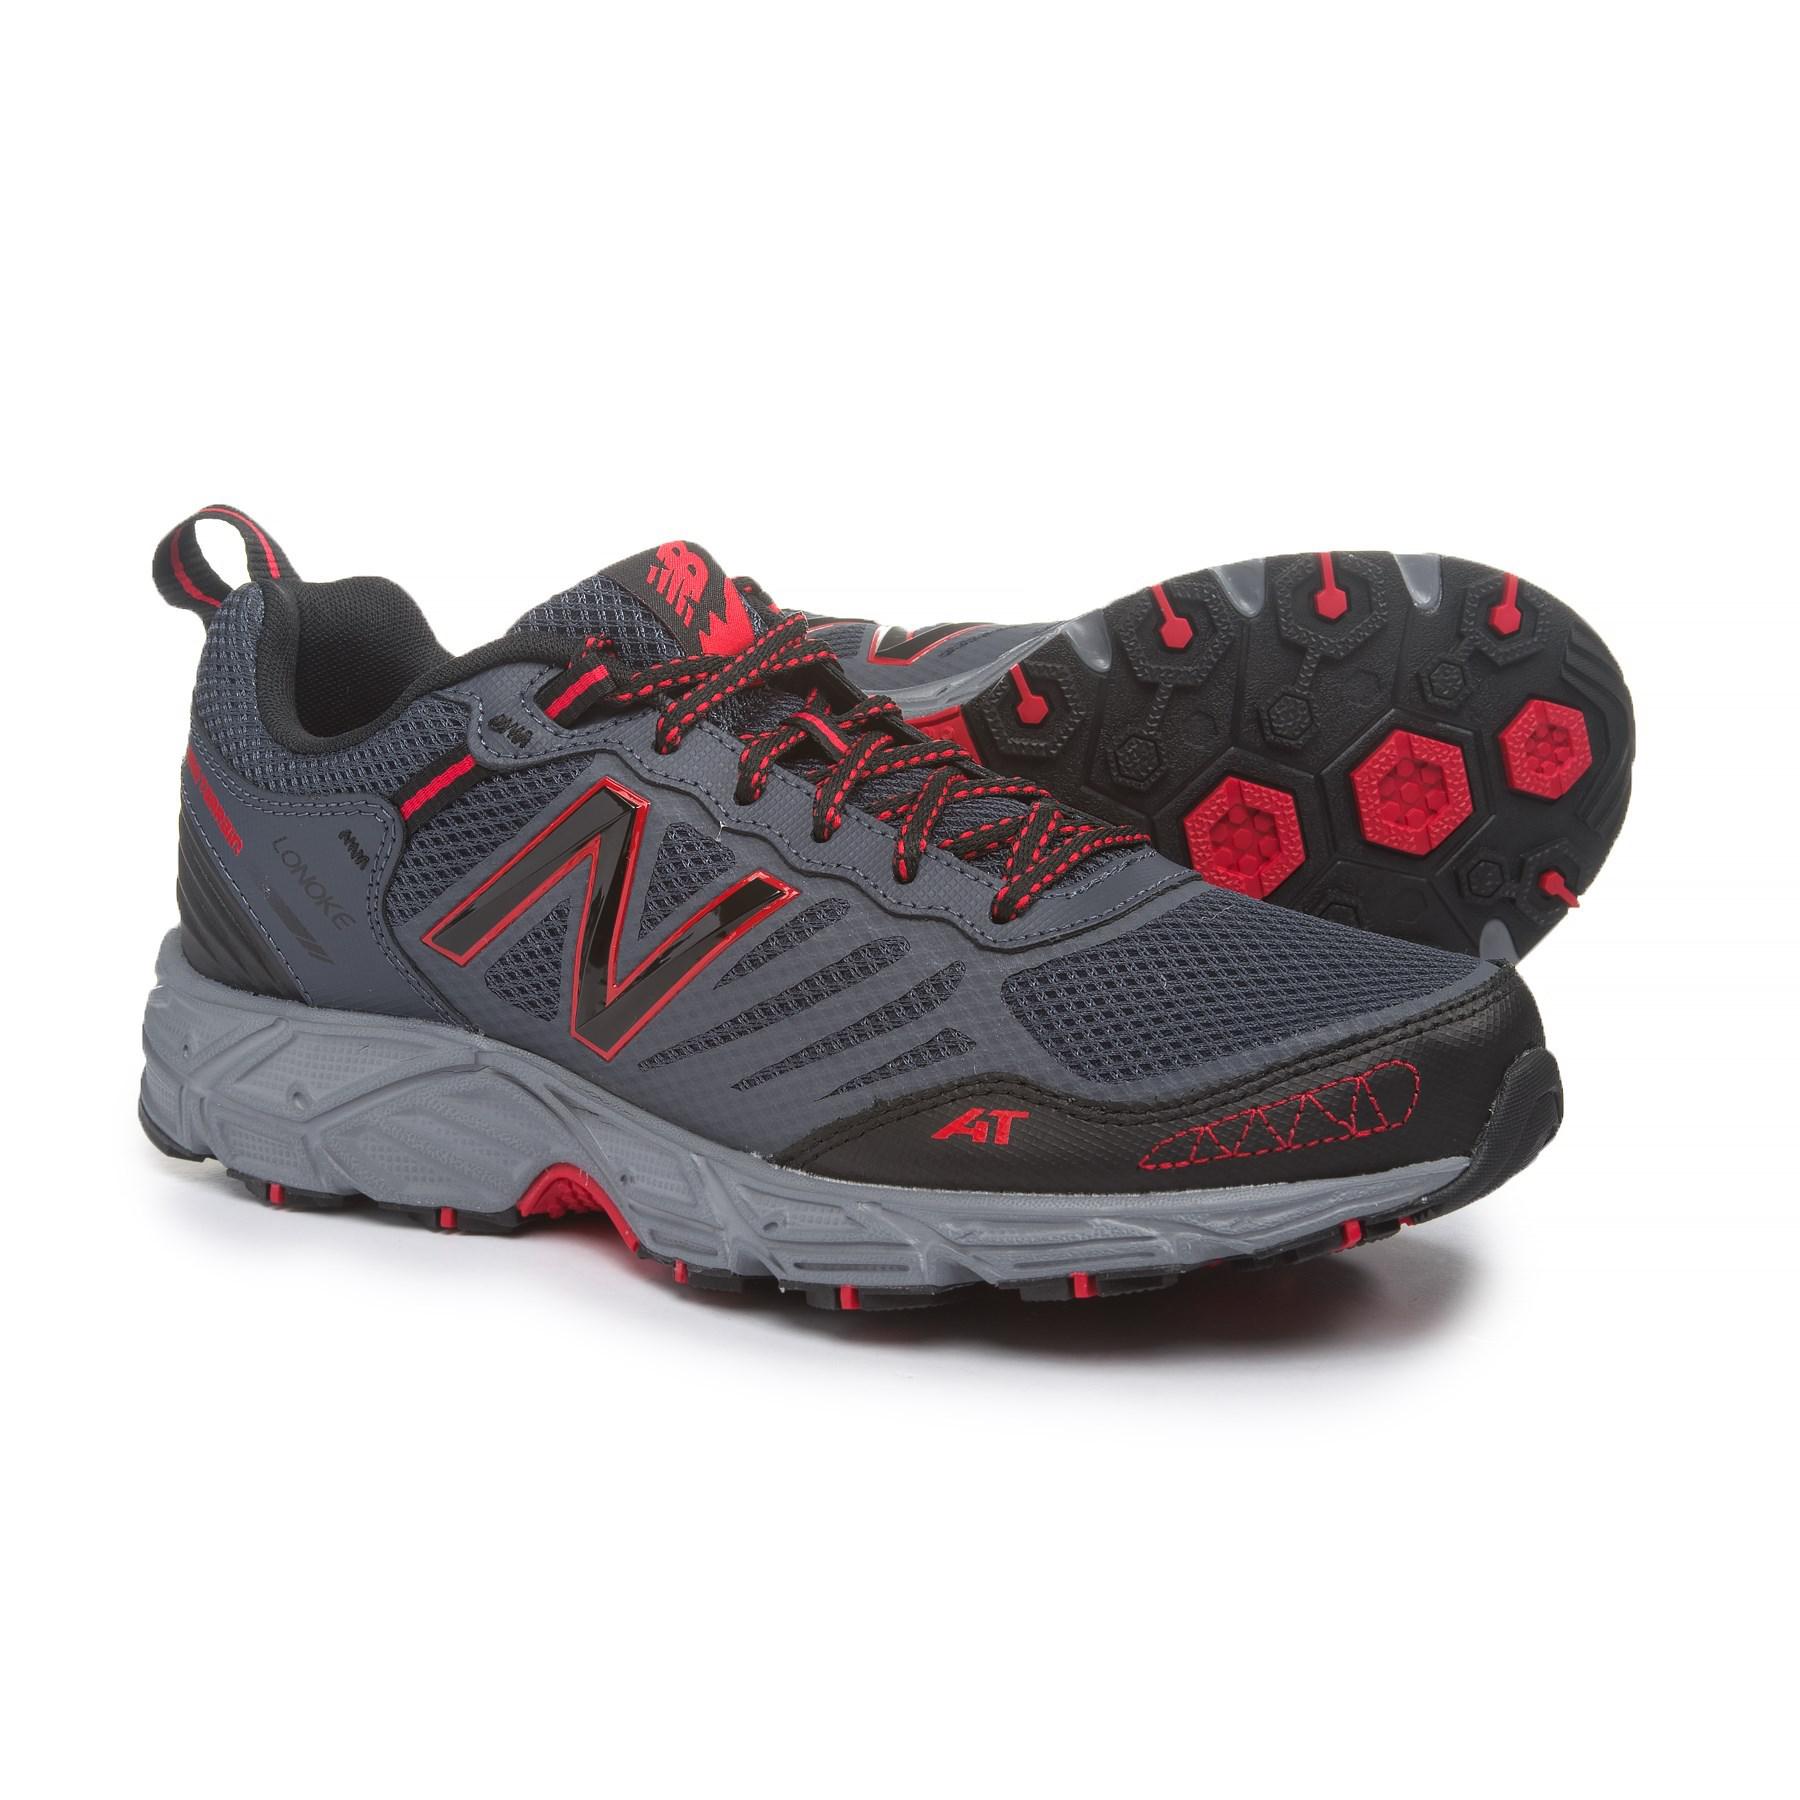 new balance lonoke trail running shoes